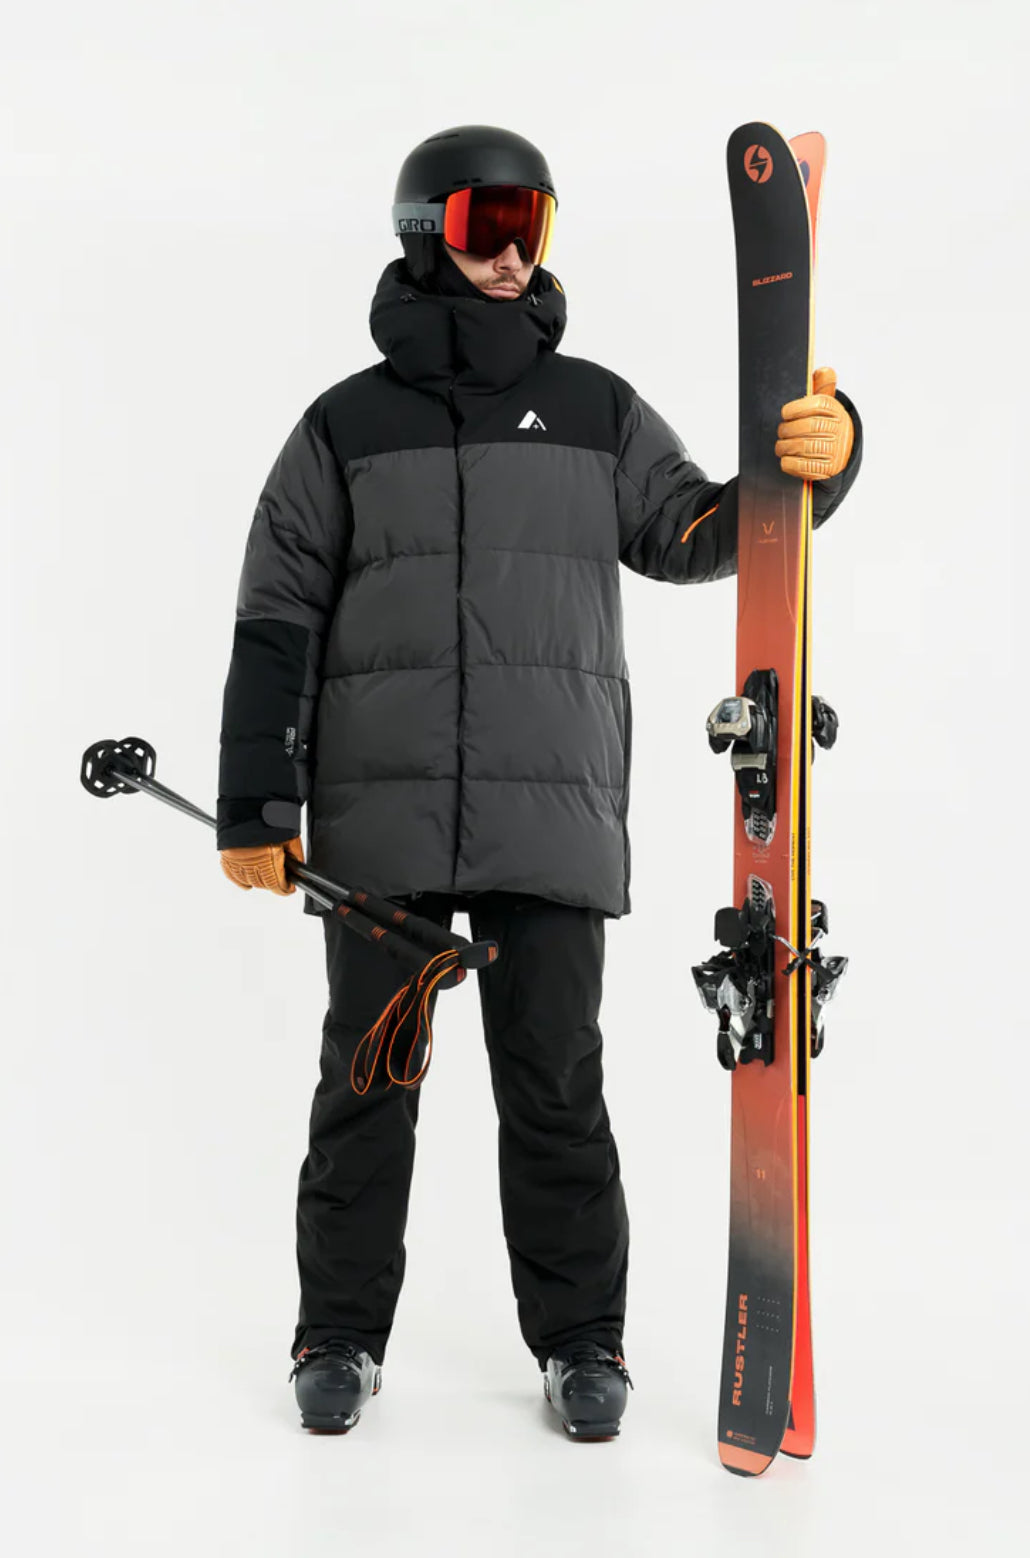 Veste ski DAVOS rouge grande taille homme Marc&Mark Qualité Randonnée